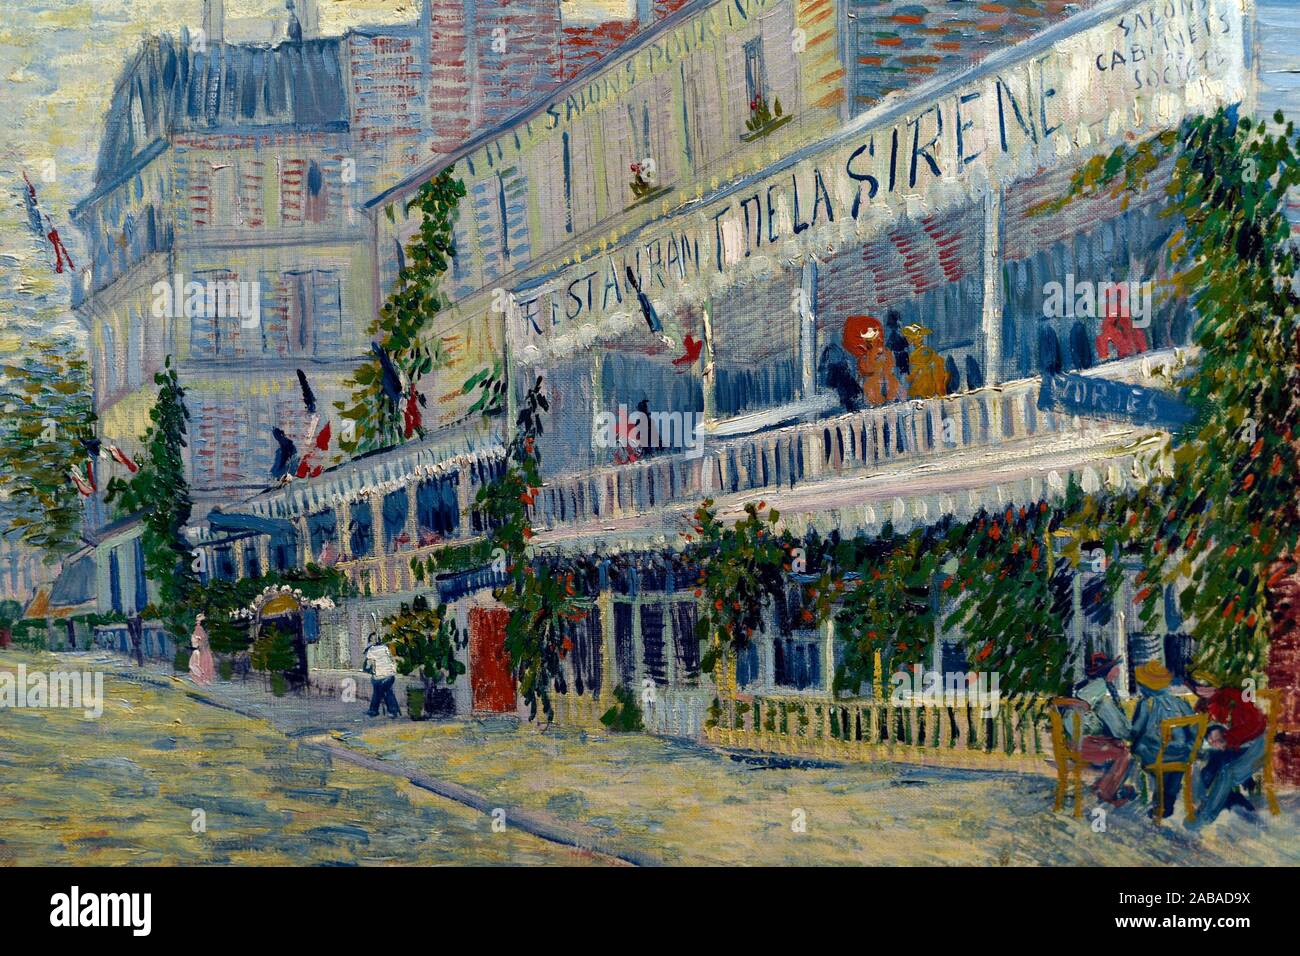 Le restaurant de la Siréne Ã Asnières, 1887, olio su tela,Vincent Van Gogh, il museo d' Orsay,Parigi,Francia. Foto Stock